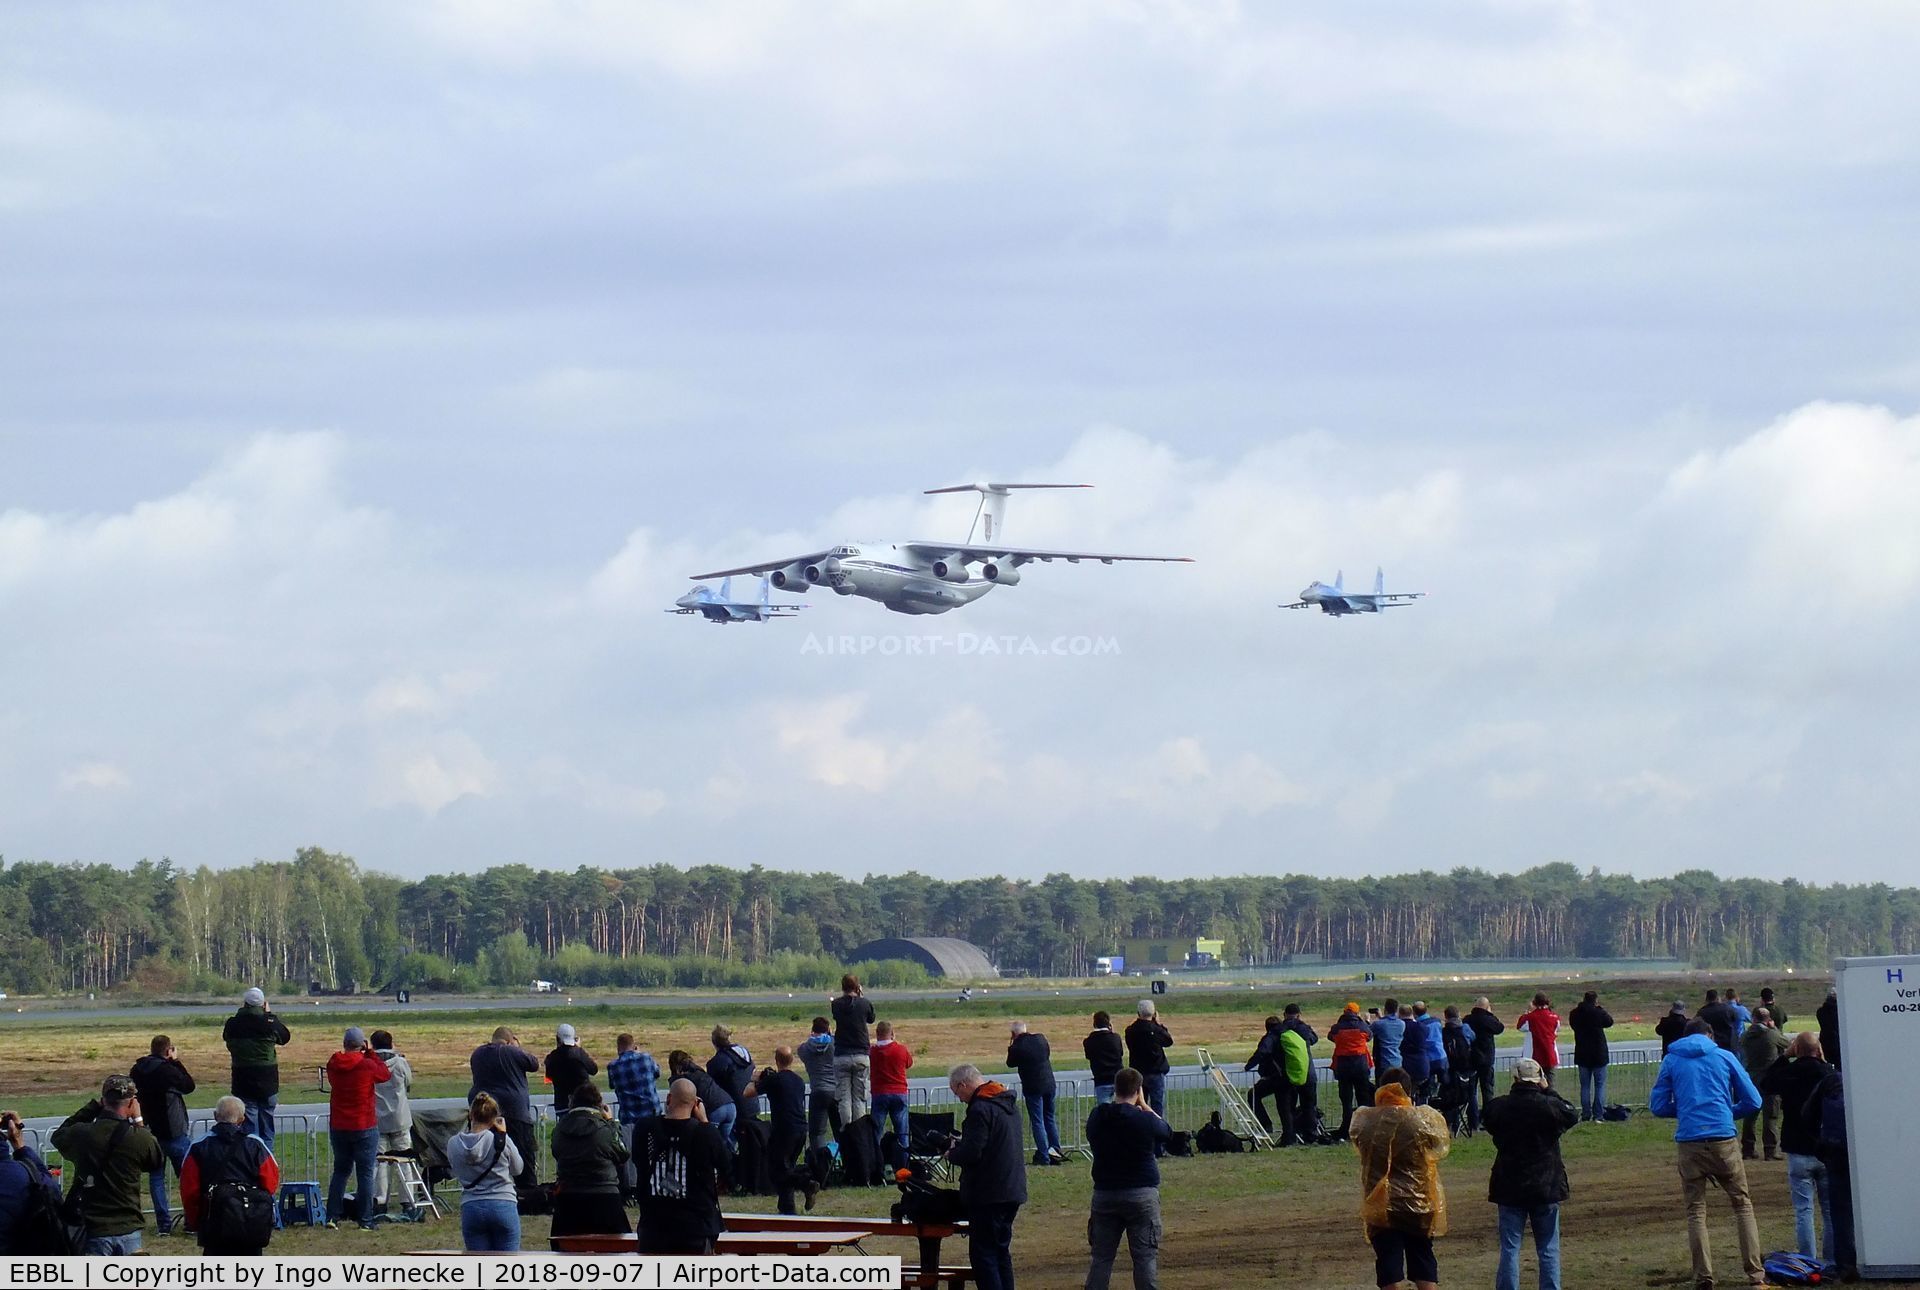 Kleine Brogel Air Base Airport, Kleine Brogel Belgium (EBBL) - Ilyushin Il-76 and 2 Sukhoi Su-27 of the Ukrainian Air Force flypast at the 2018 BAFD Spottersday at Kleine Brogel airbase